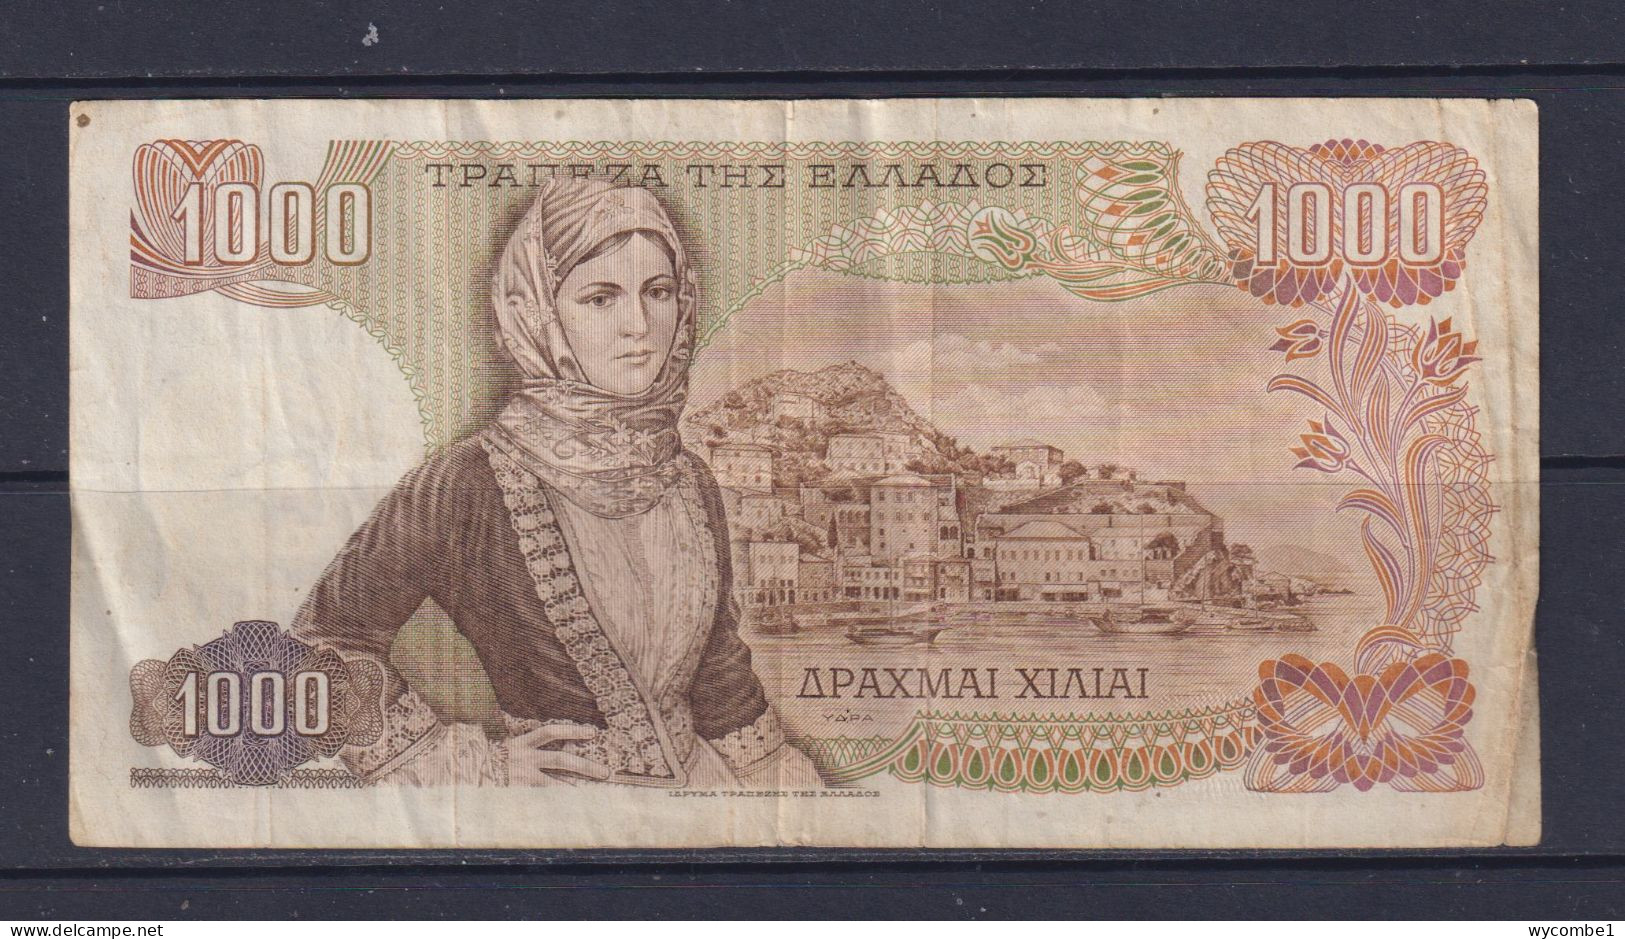 GREECE - 1970 1000 Drachma Circulated Banknote - Griekenland